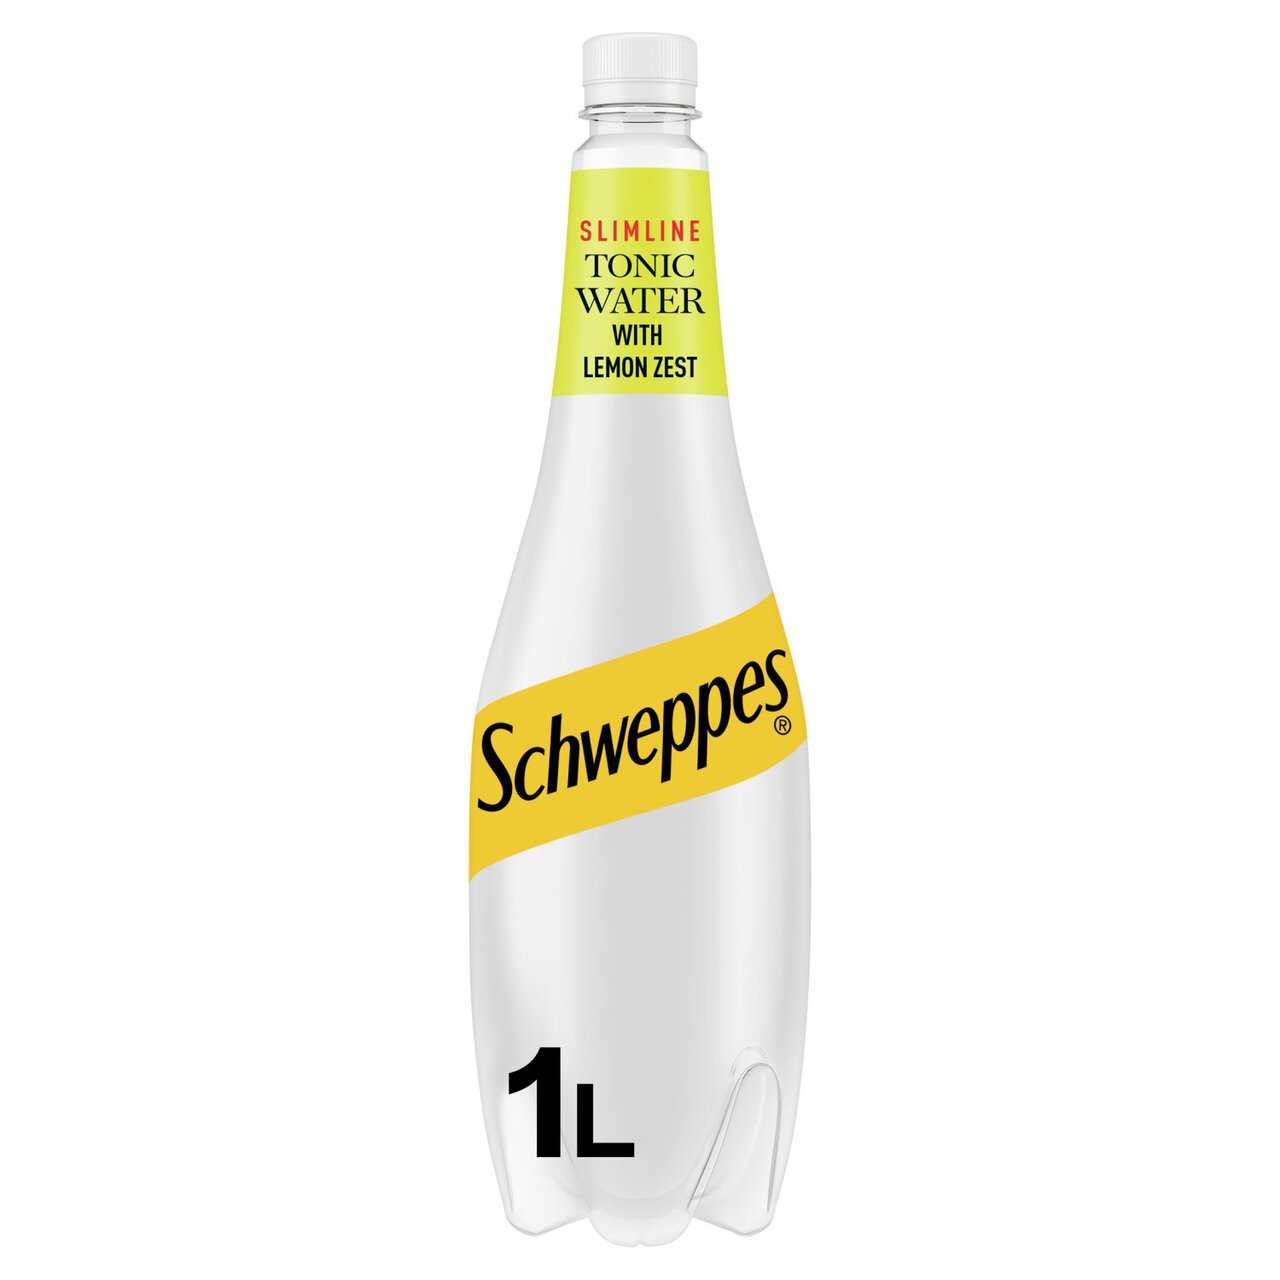 Schweppes Slimline Tonic with Zest of Lemon 1l